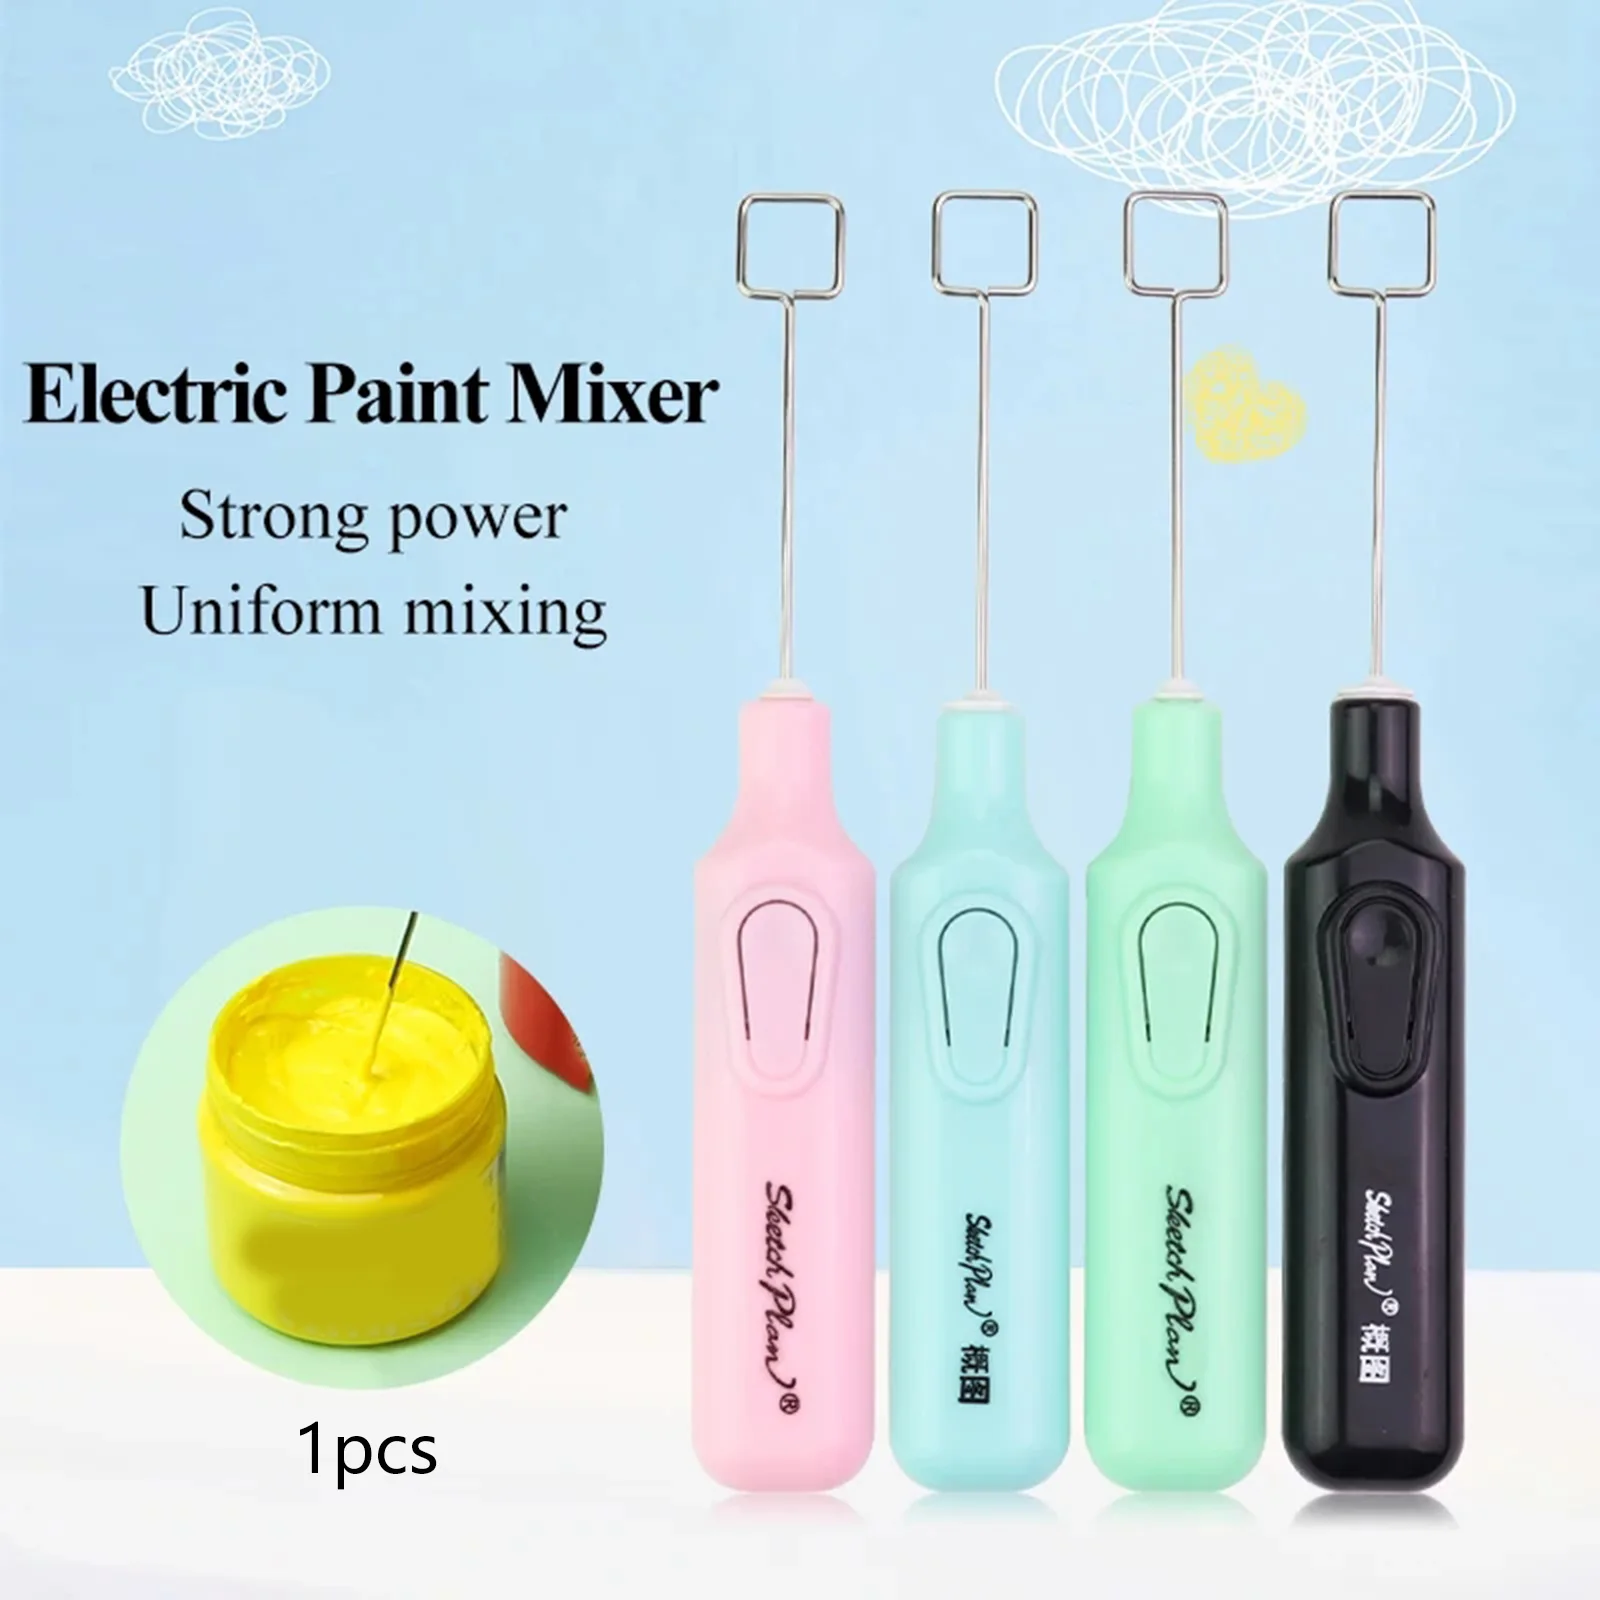 

1Pcs Electric Paint Mixer Electric Pigment Stirrer Mixer Painting Accessories for Art Painting Drawing Art Color Random